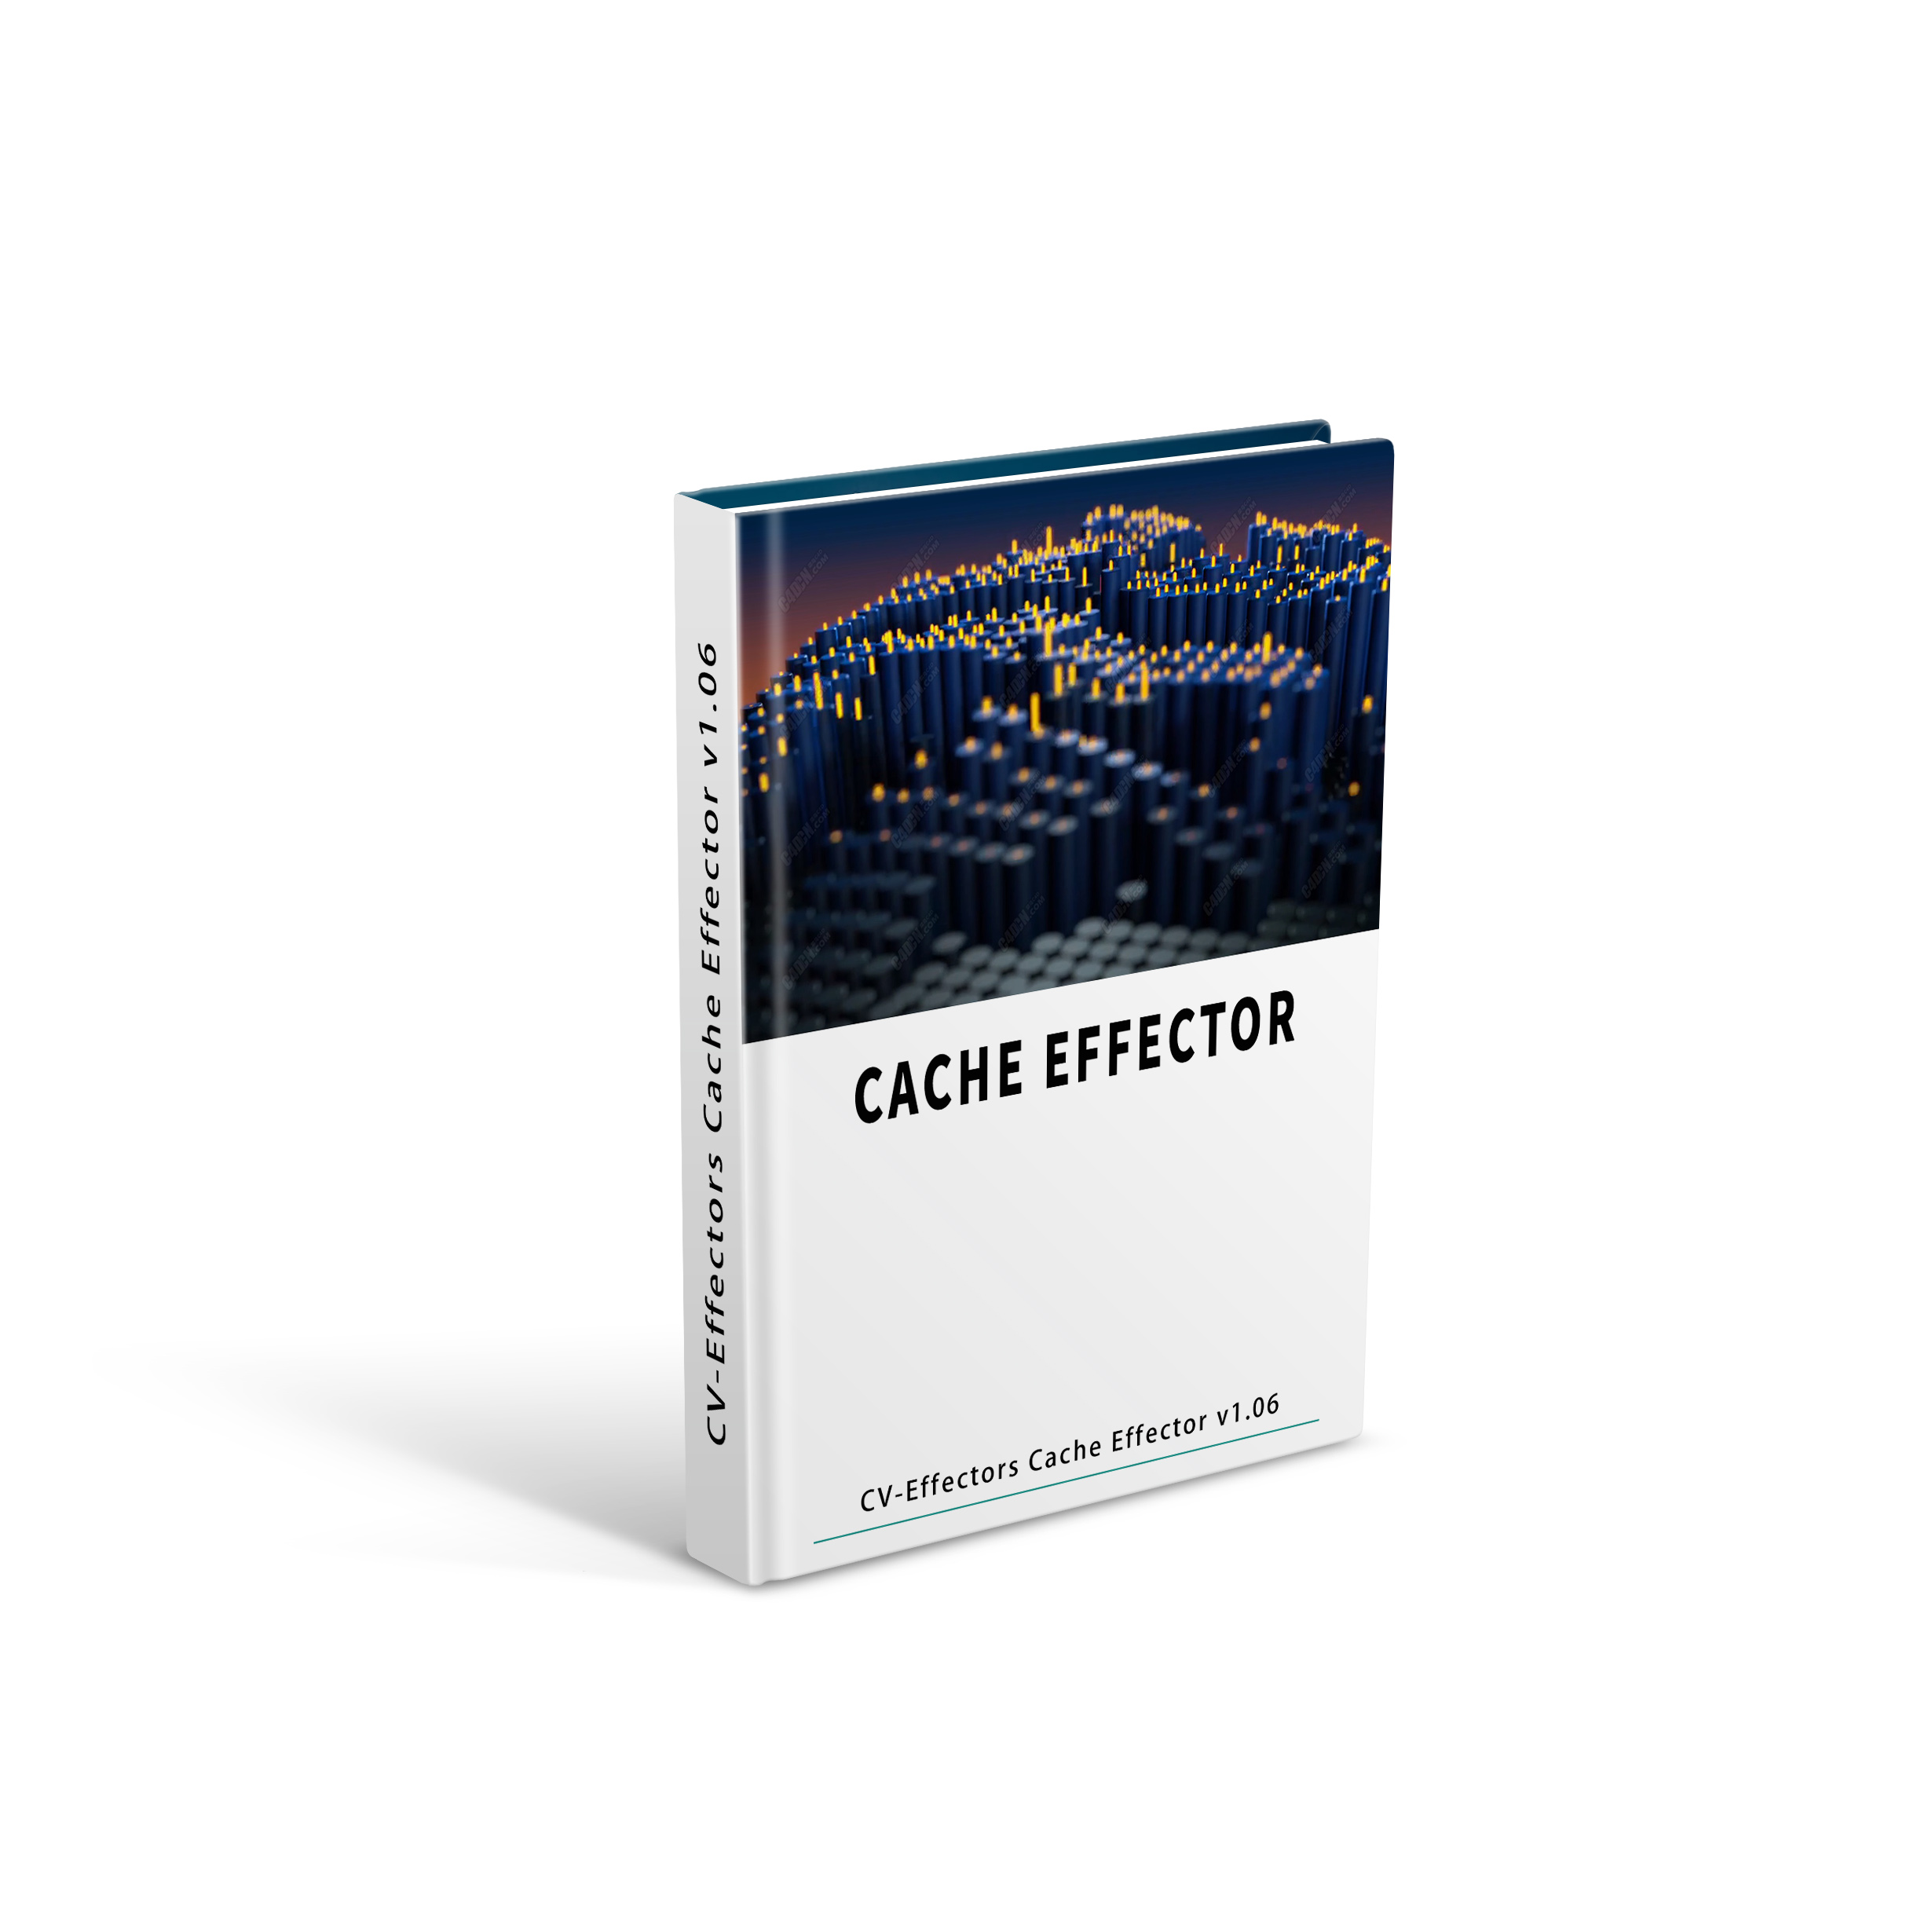 CV-Effectors Cache Effector v1.06 Fro Cinema 4D R19-S22汉化版